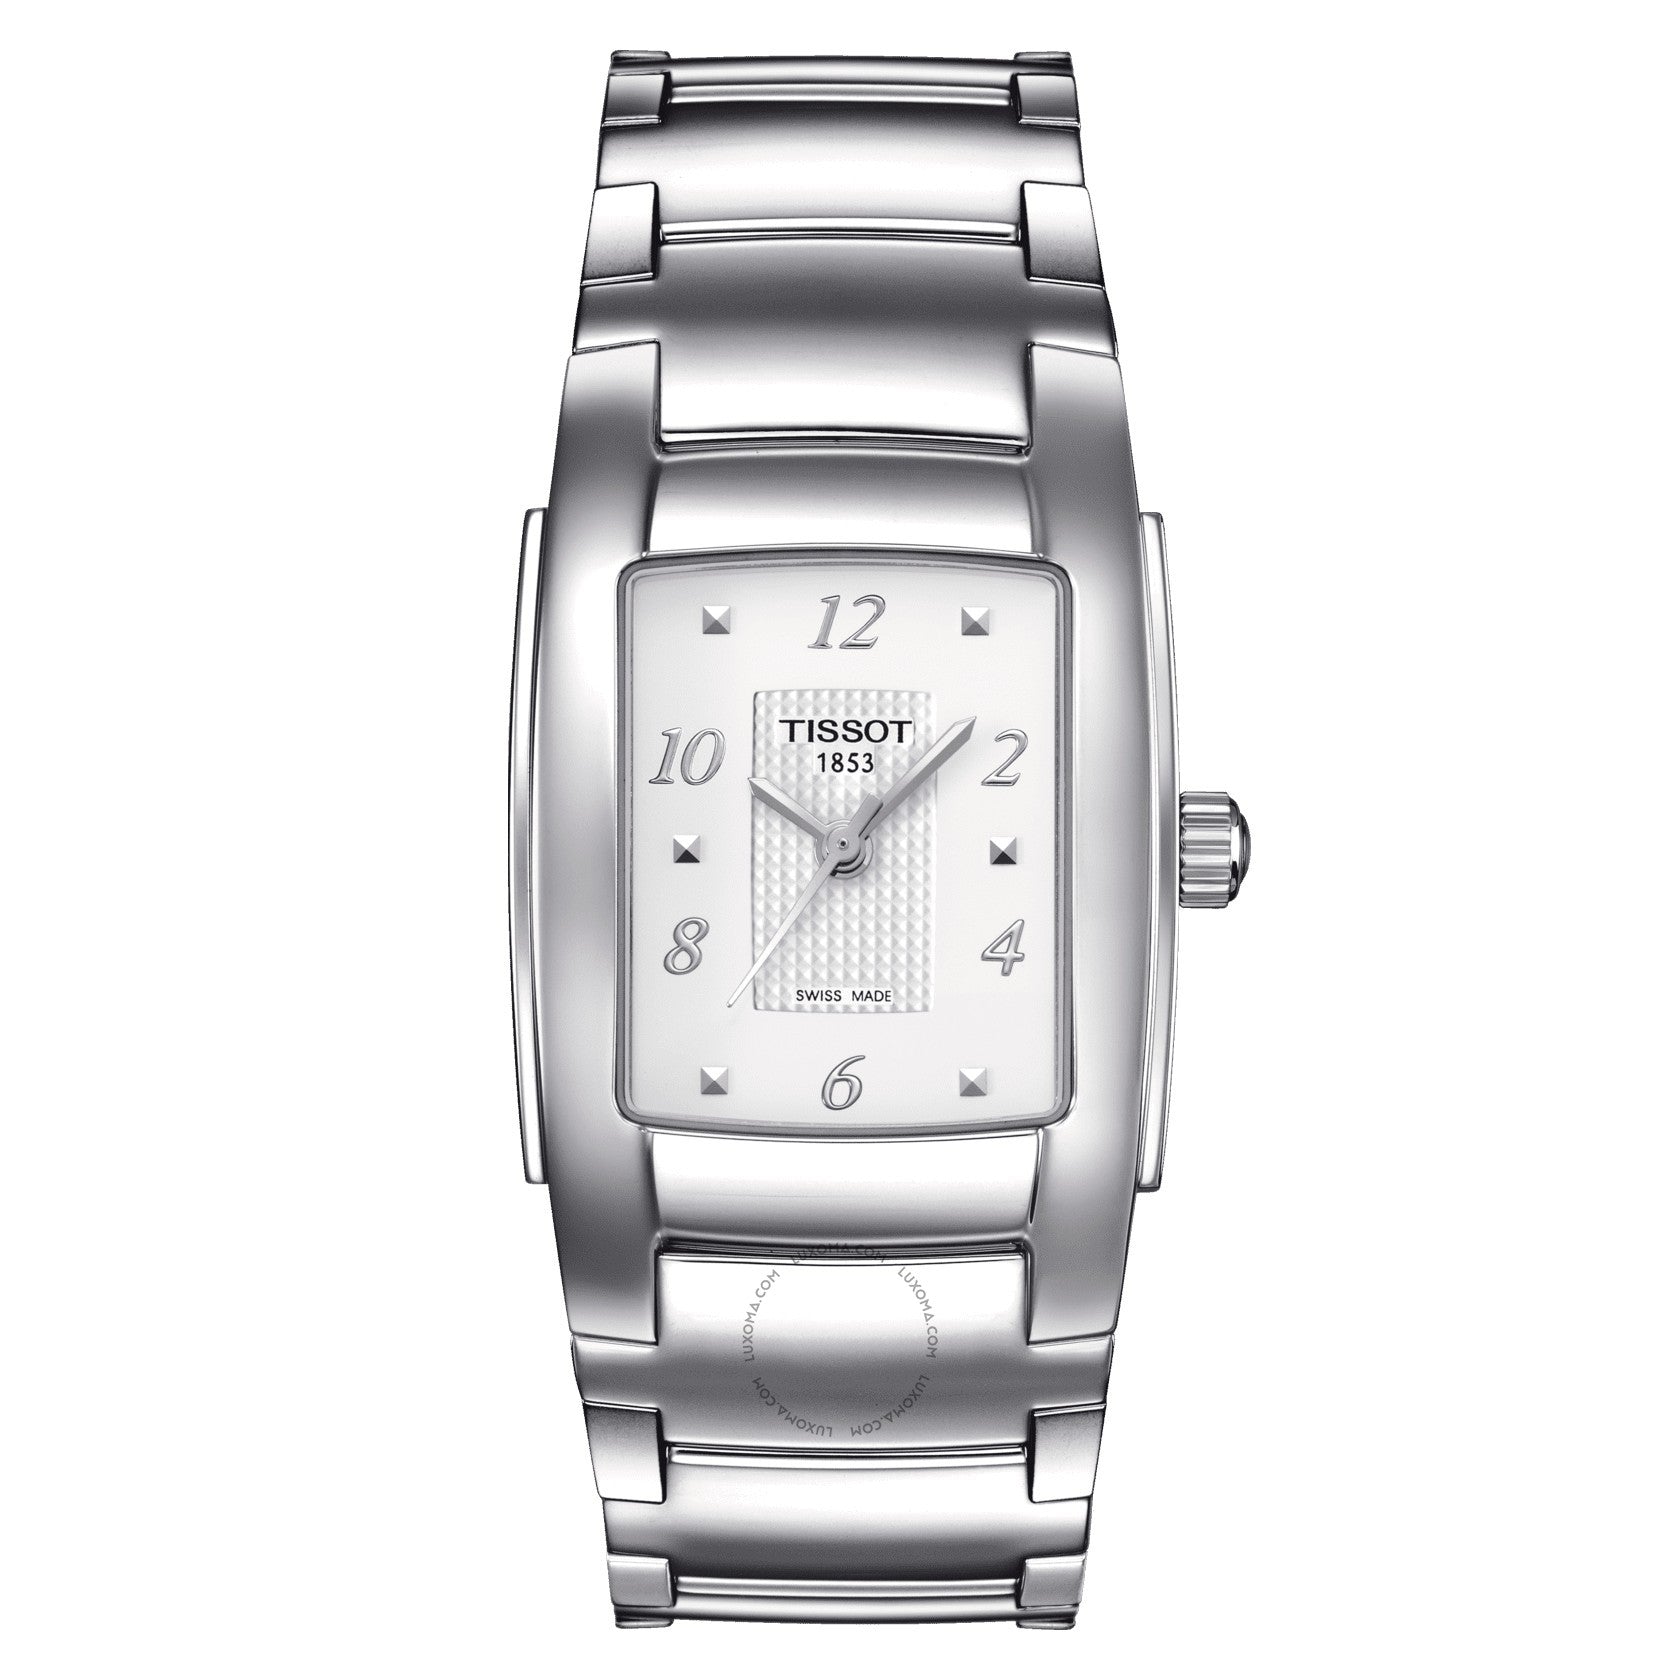 Tissot T10 Quartz Silver Dial Ladies Watch T073.310.11.017.00